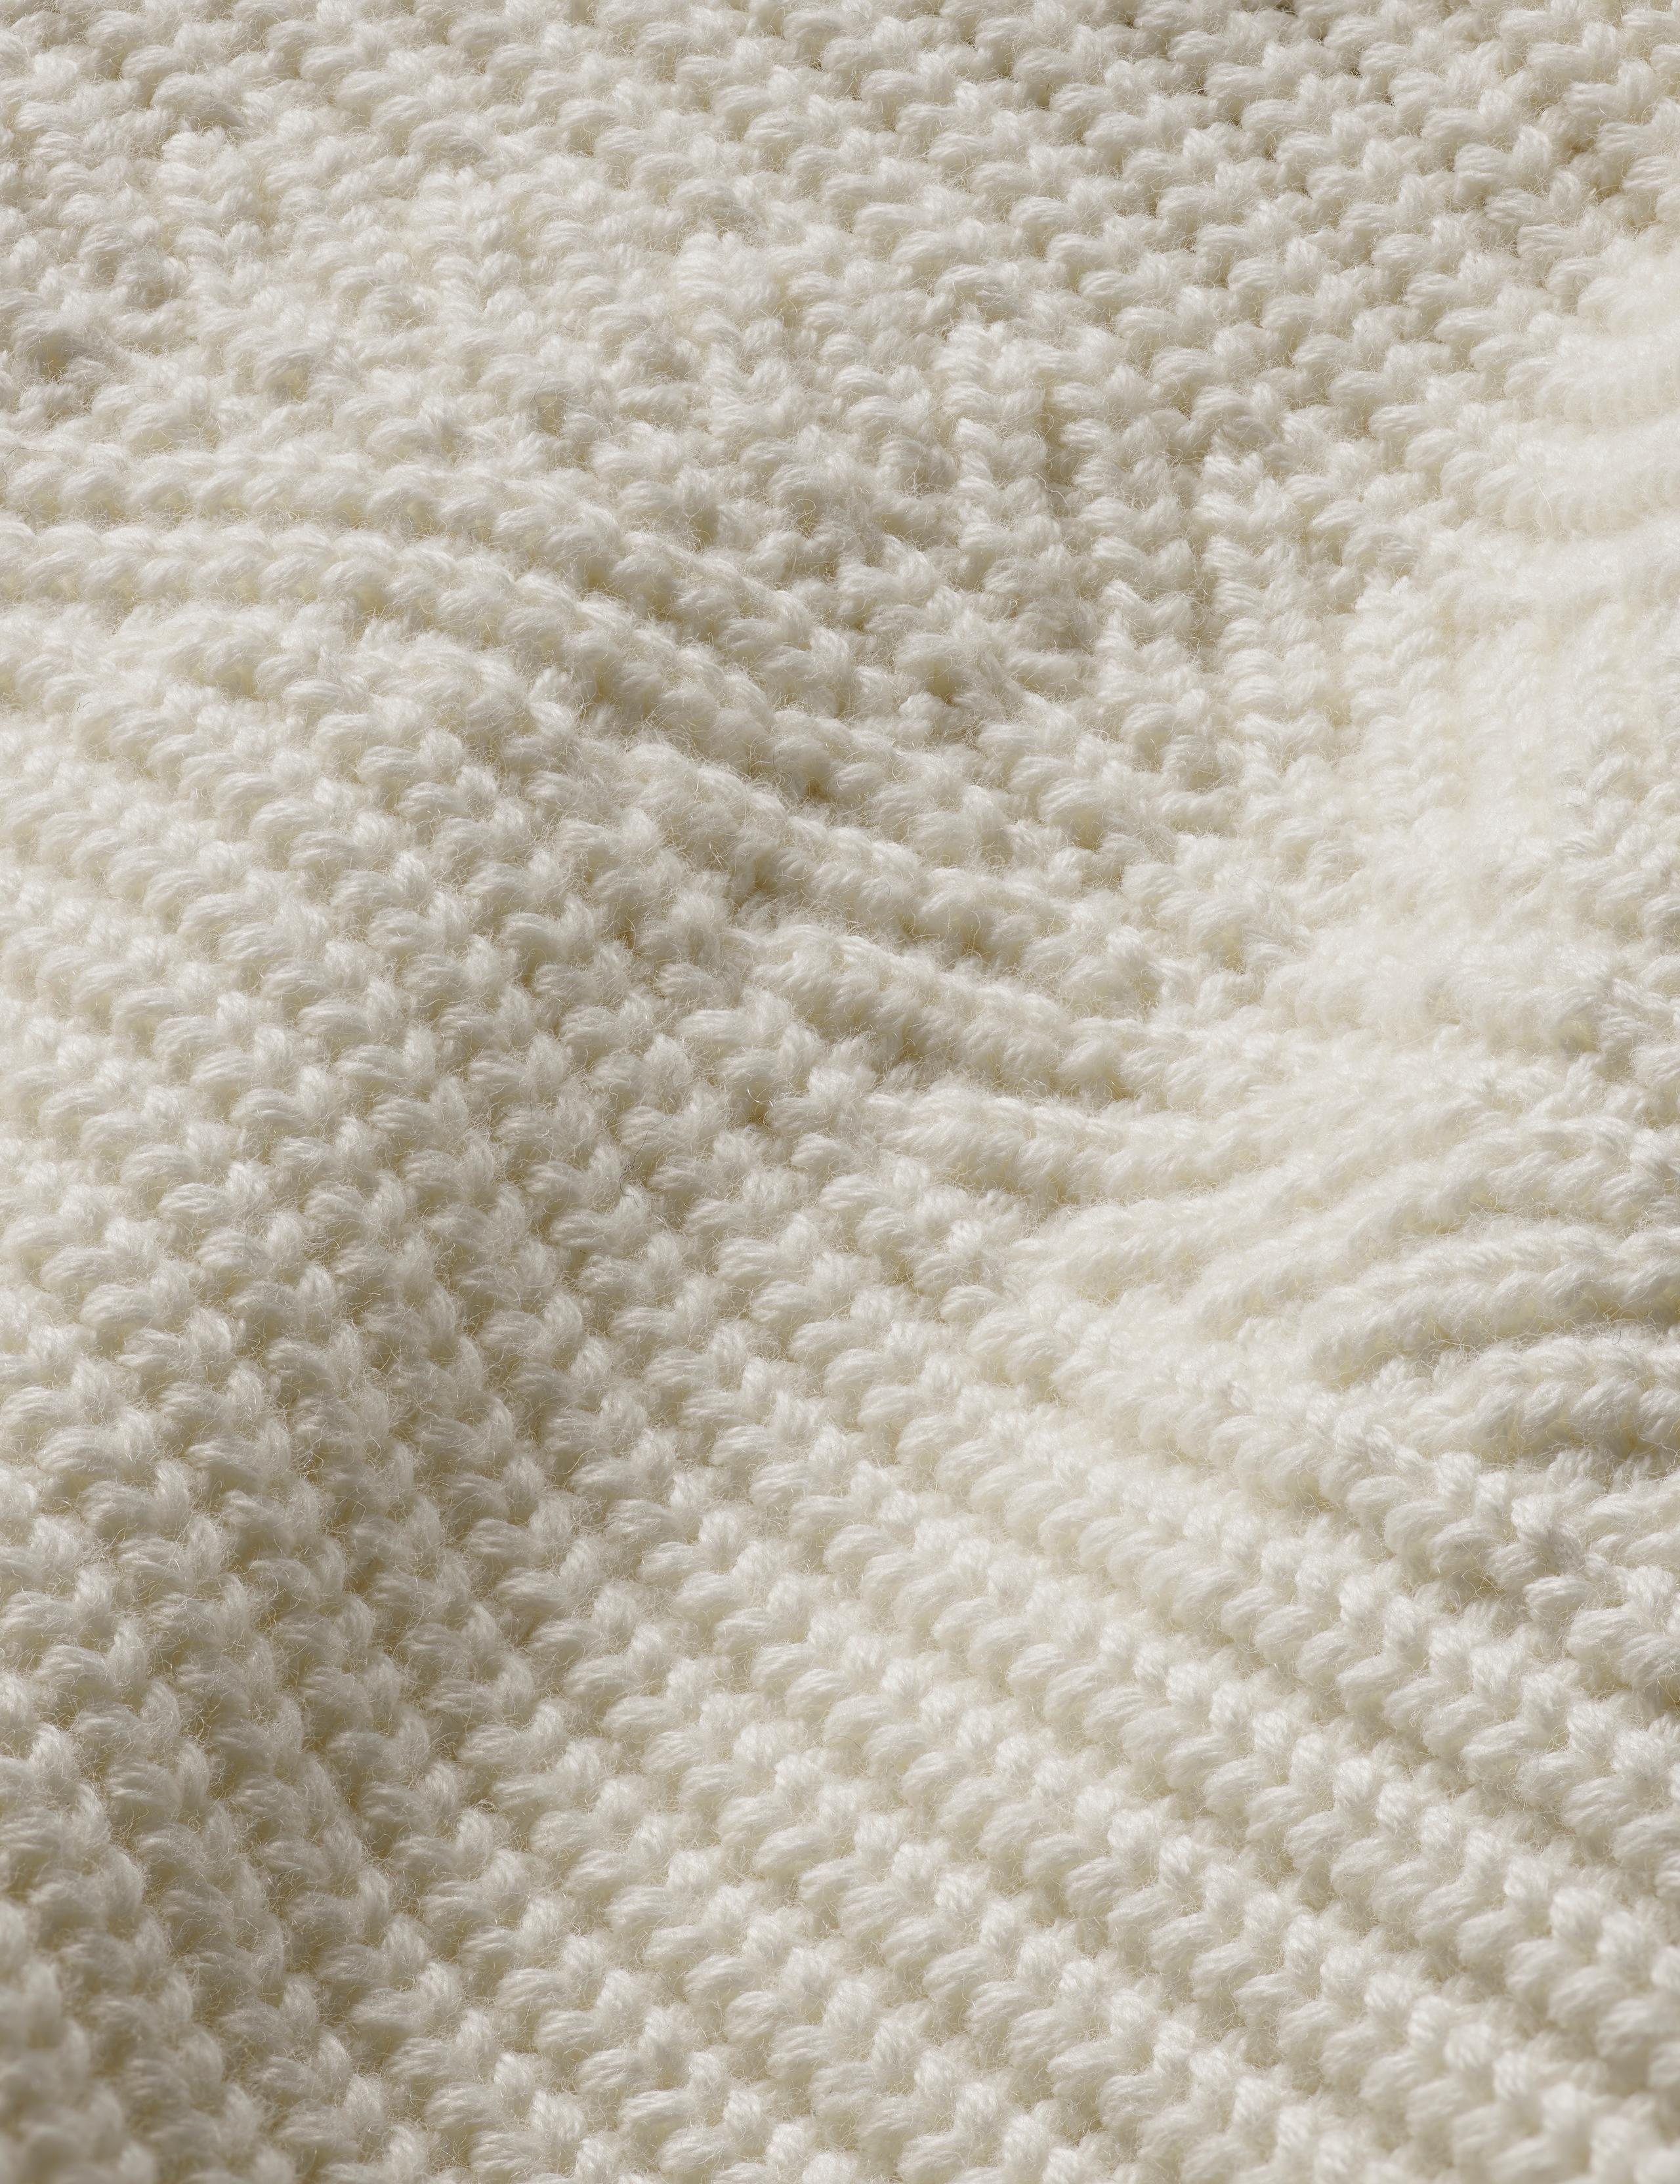 Closeup detail of sweater stitching